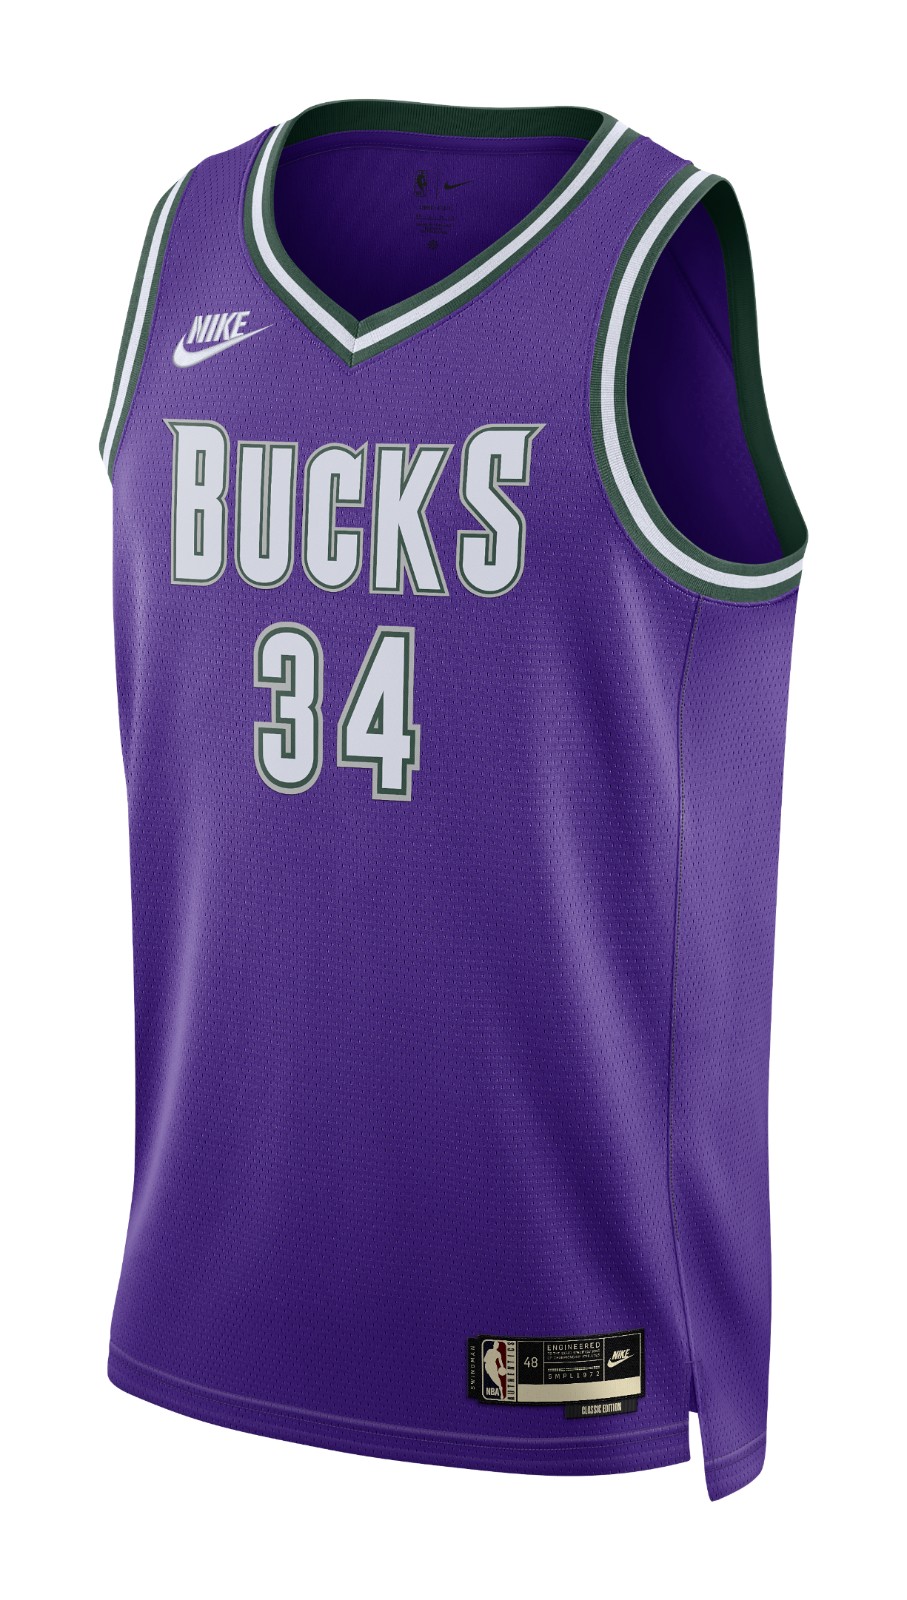 Milwaukee Bucks - The Bucks' Classic Edition uniform is Nike's